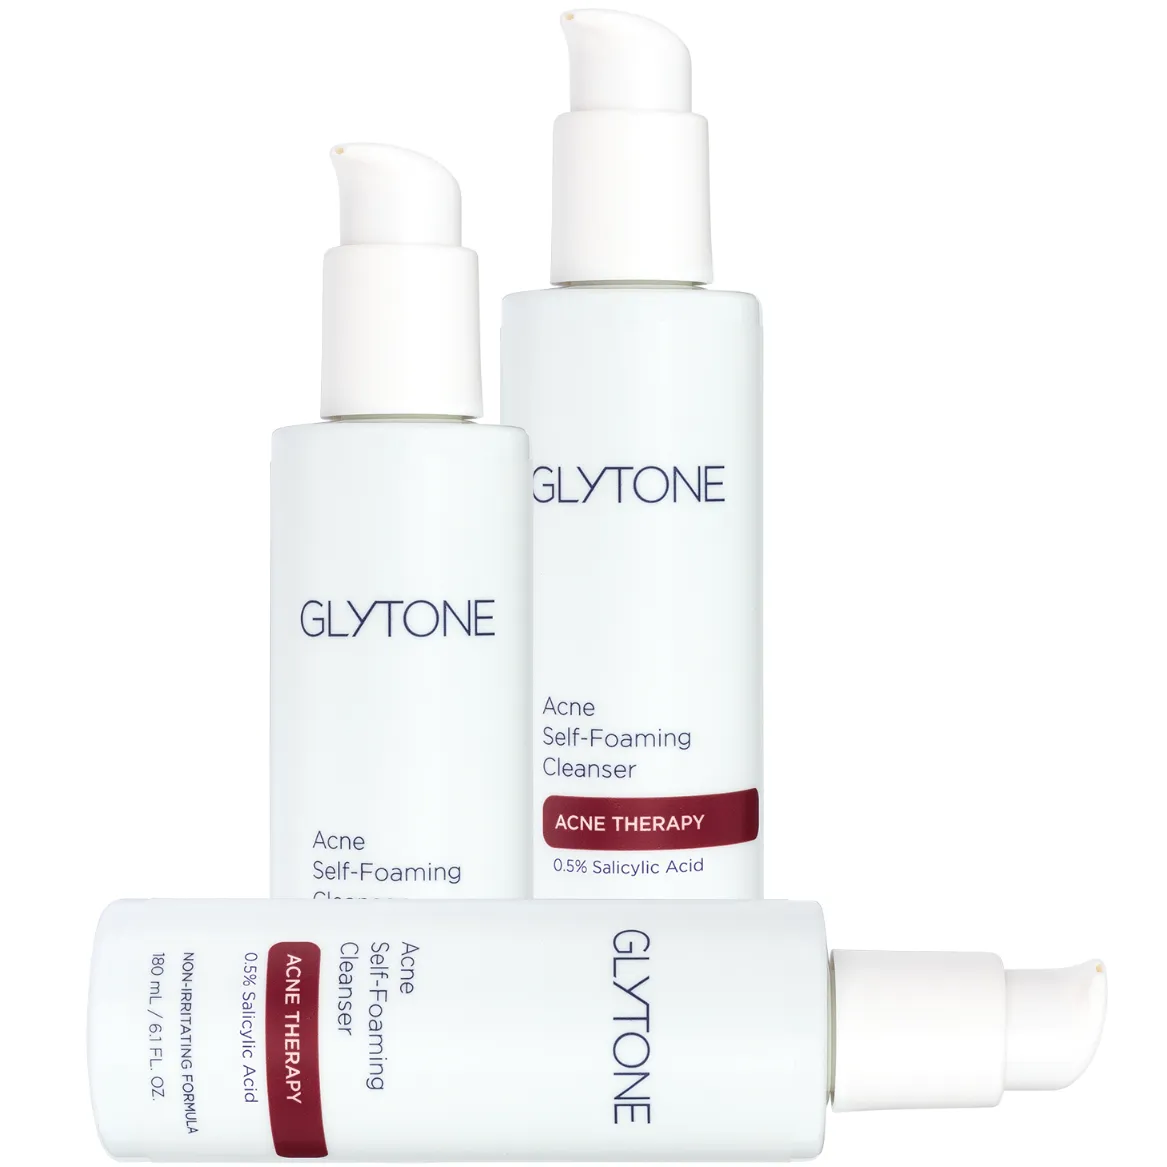 Free Glytone Skincare Product Samples